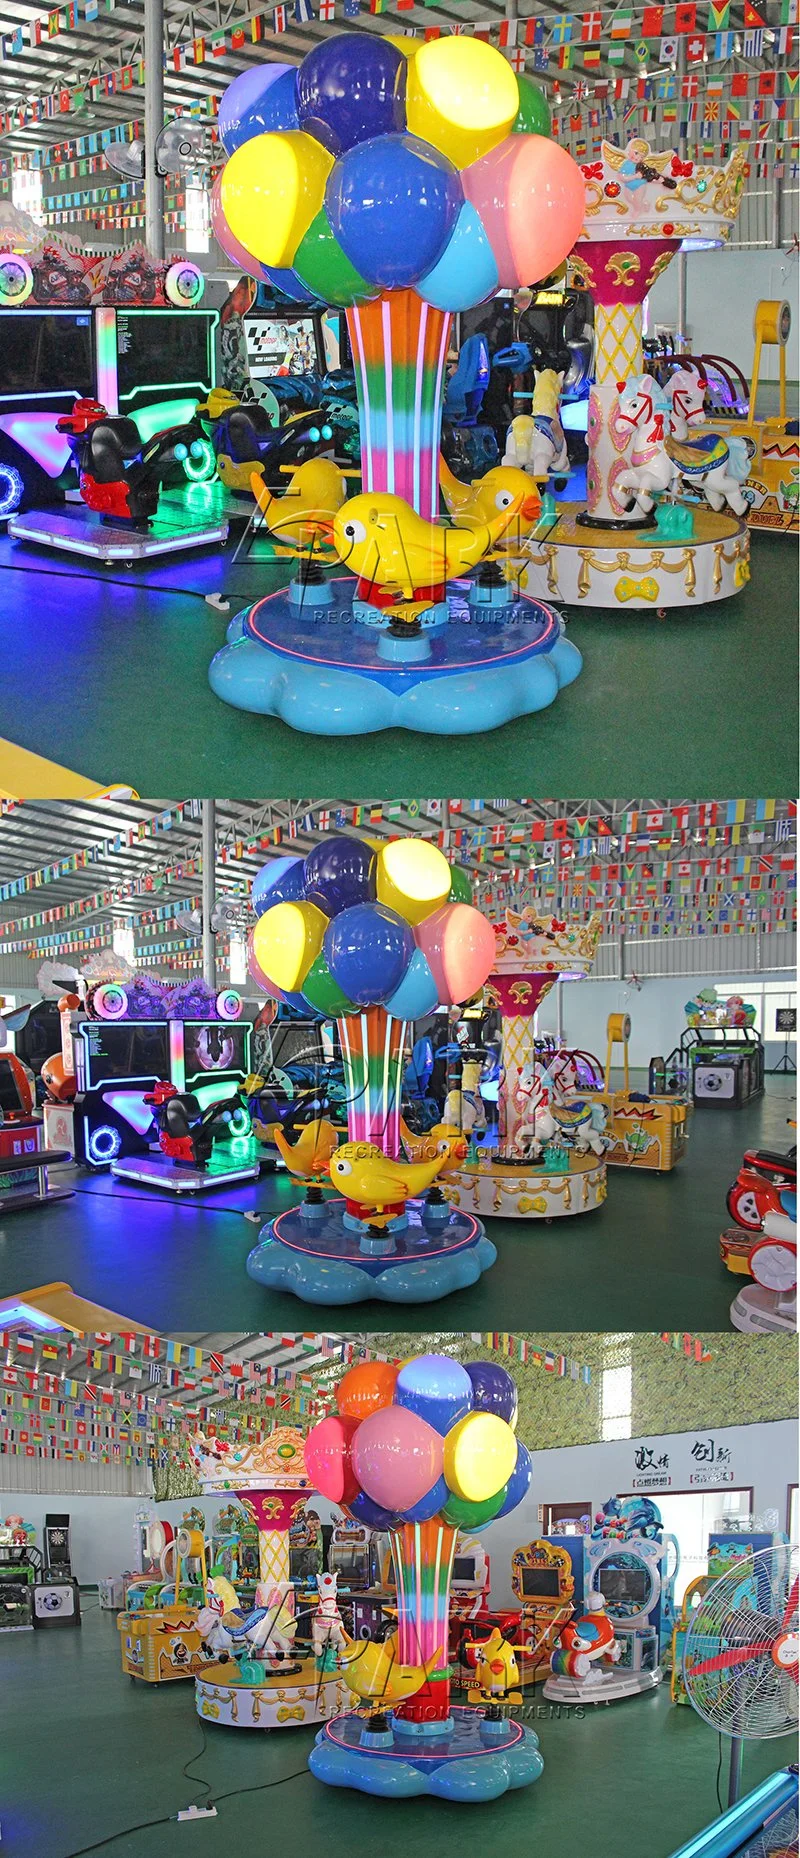 3 Seats Merry Go Round Mini Carousel Ride Kiddie Ride Amusement Game Machine